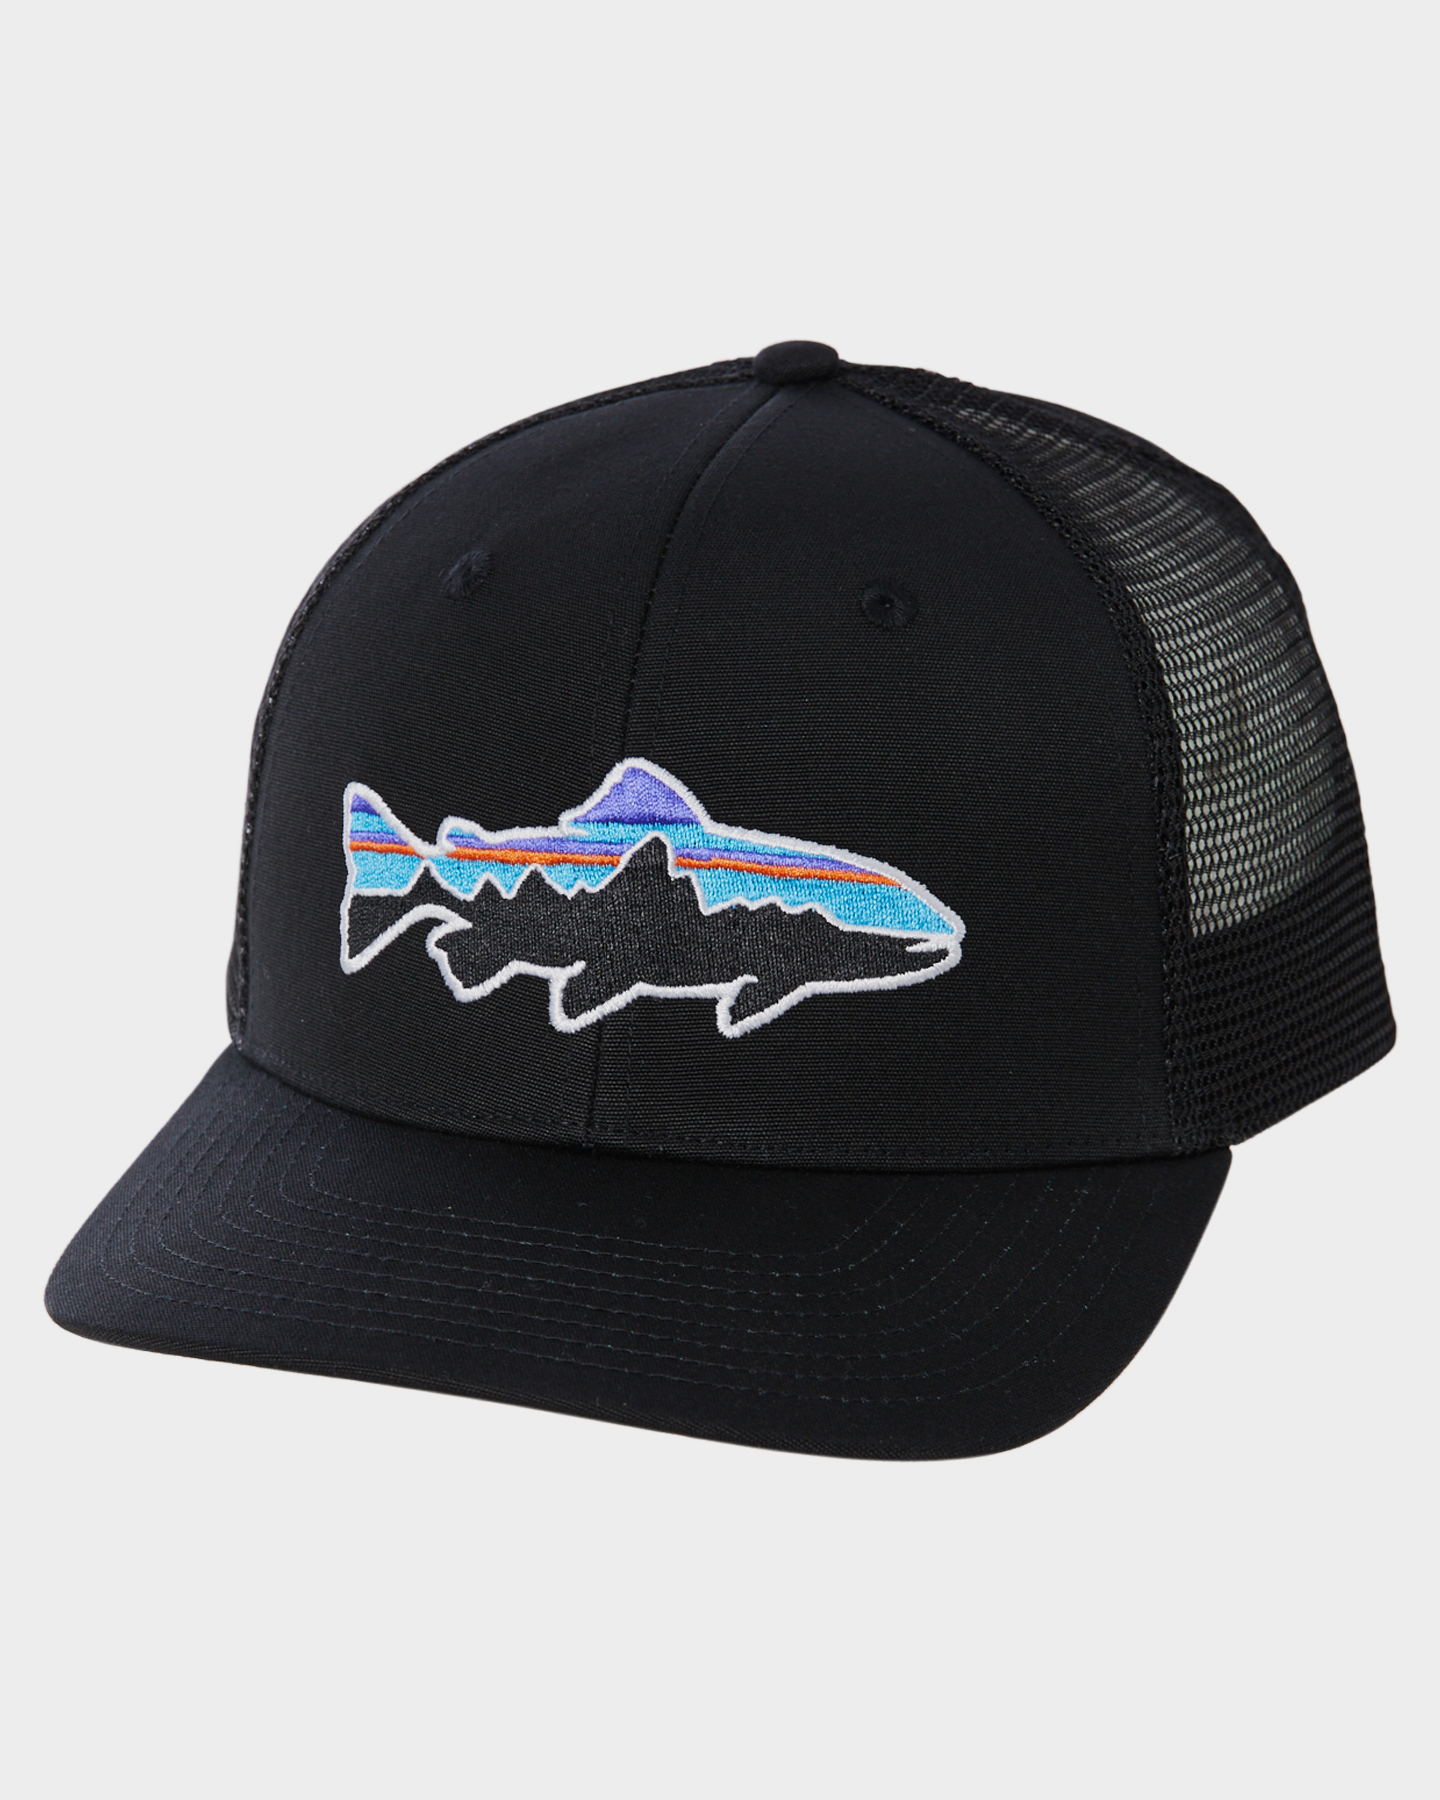 Patagonia Fitz Roy Trout Trucker Hat - Black